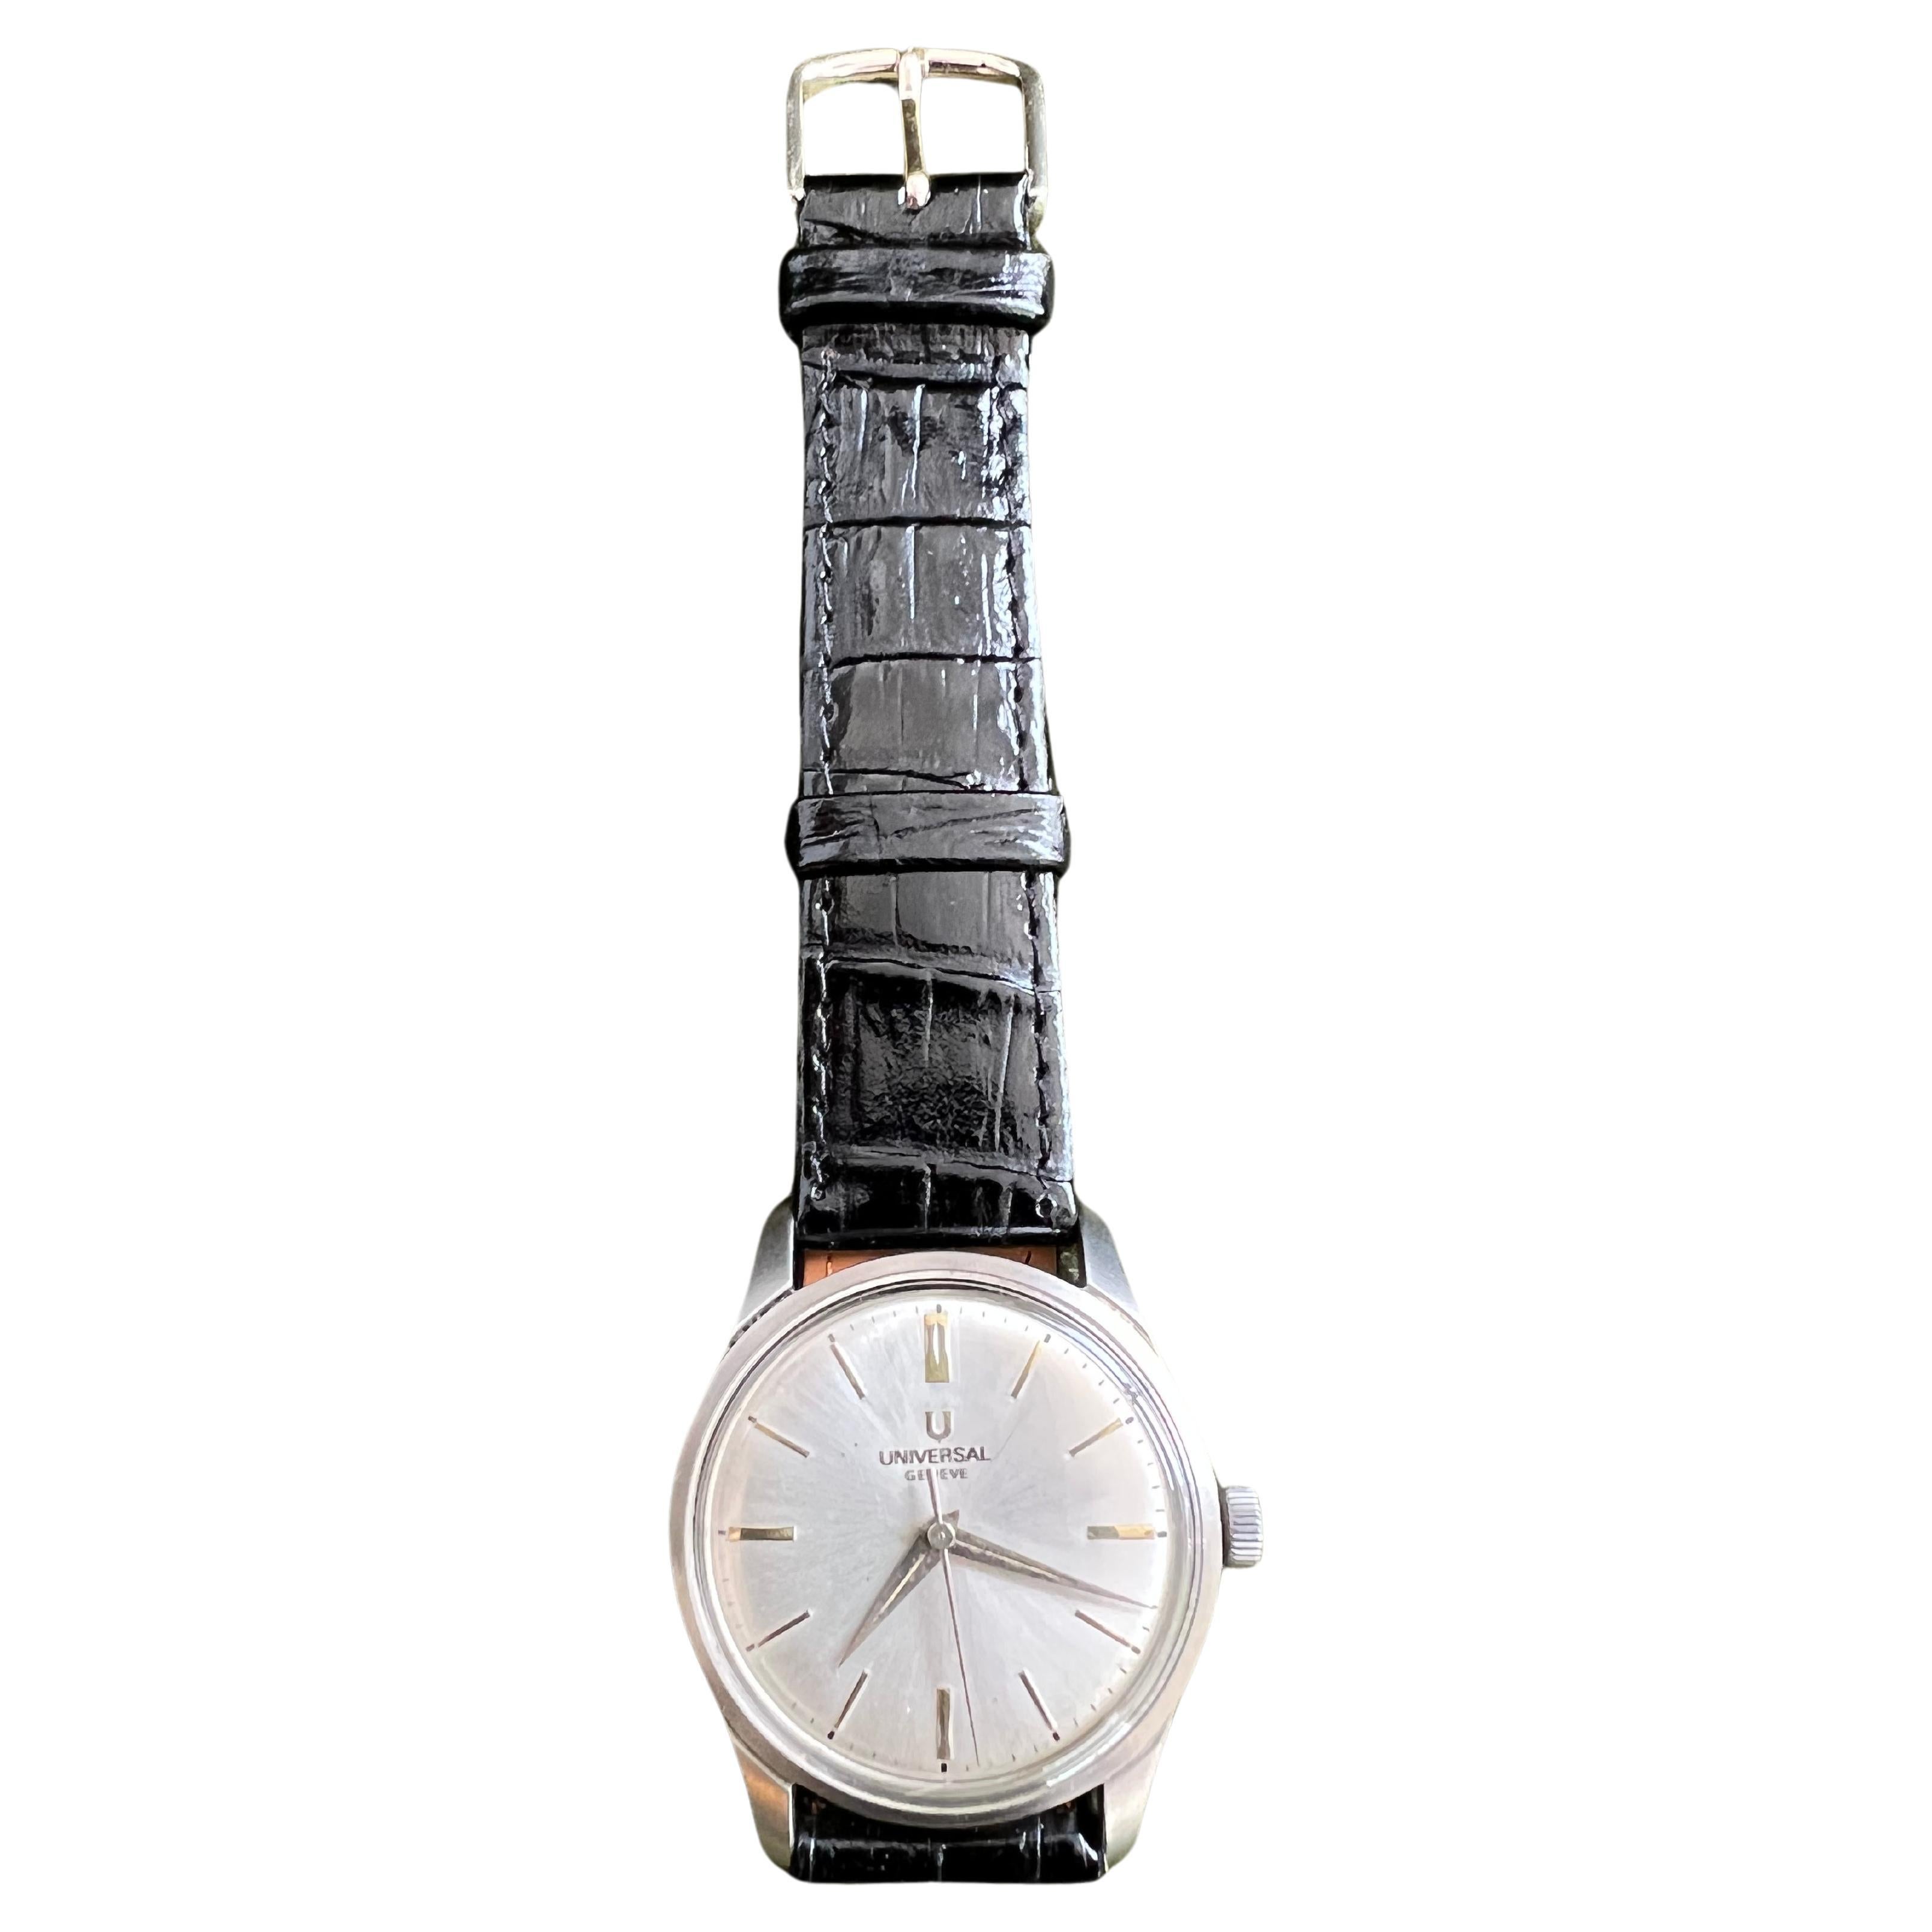  Vintage & Rare Universal Geneva White Face Circa 1960 Classic Dress Watch